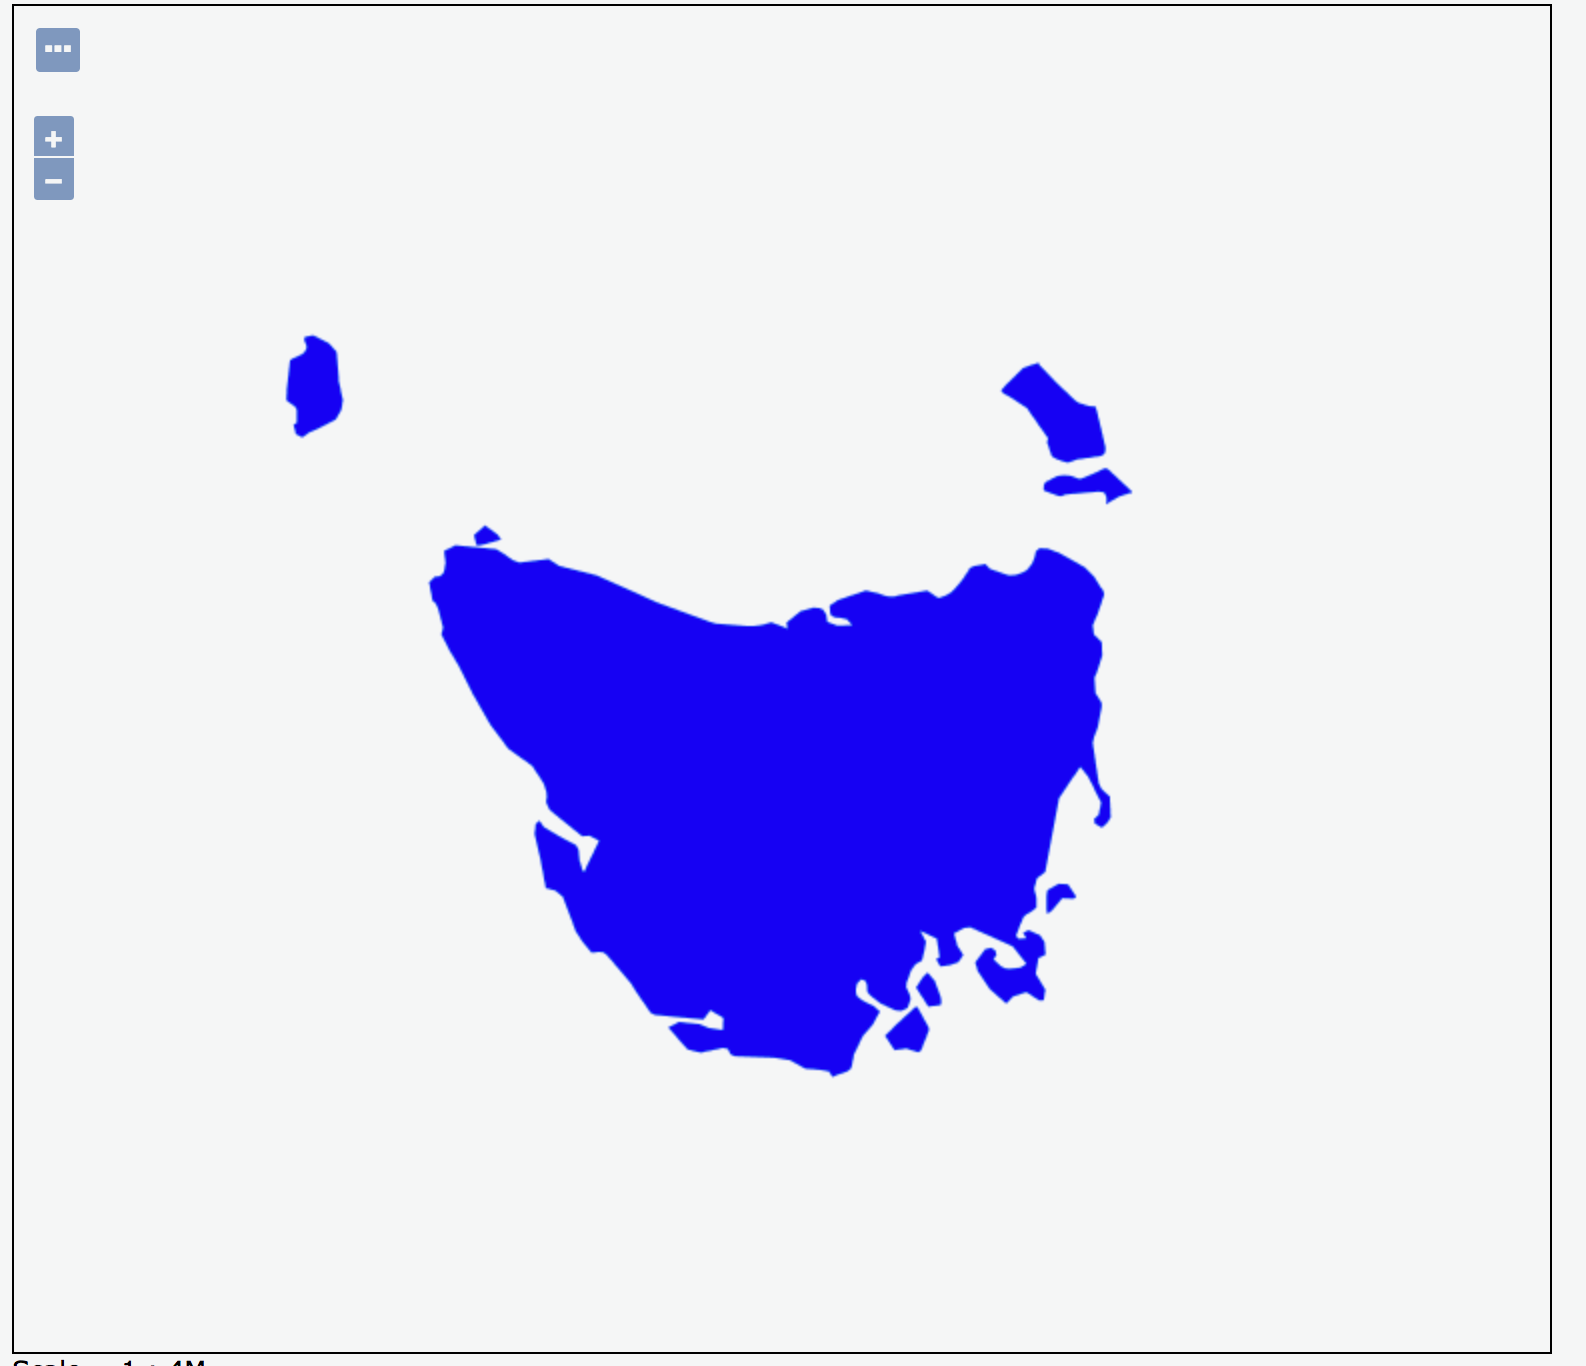 ../../images/tasmania_state_boundaries_blue_2.png